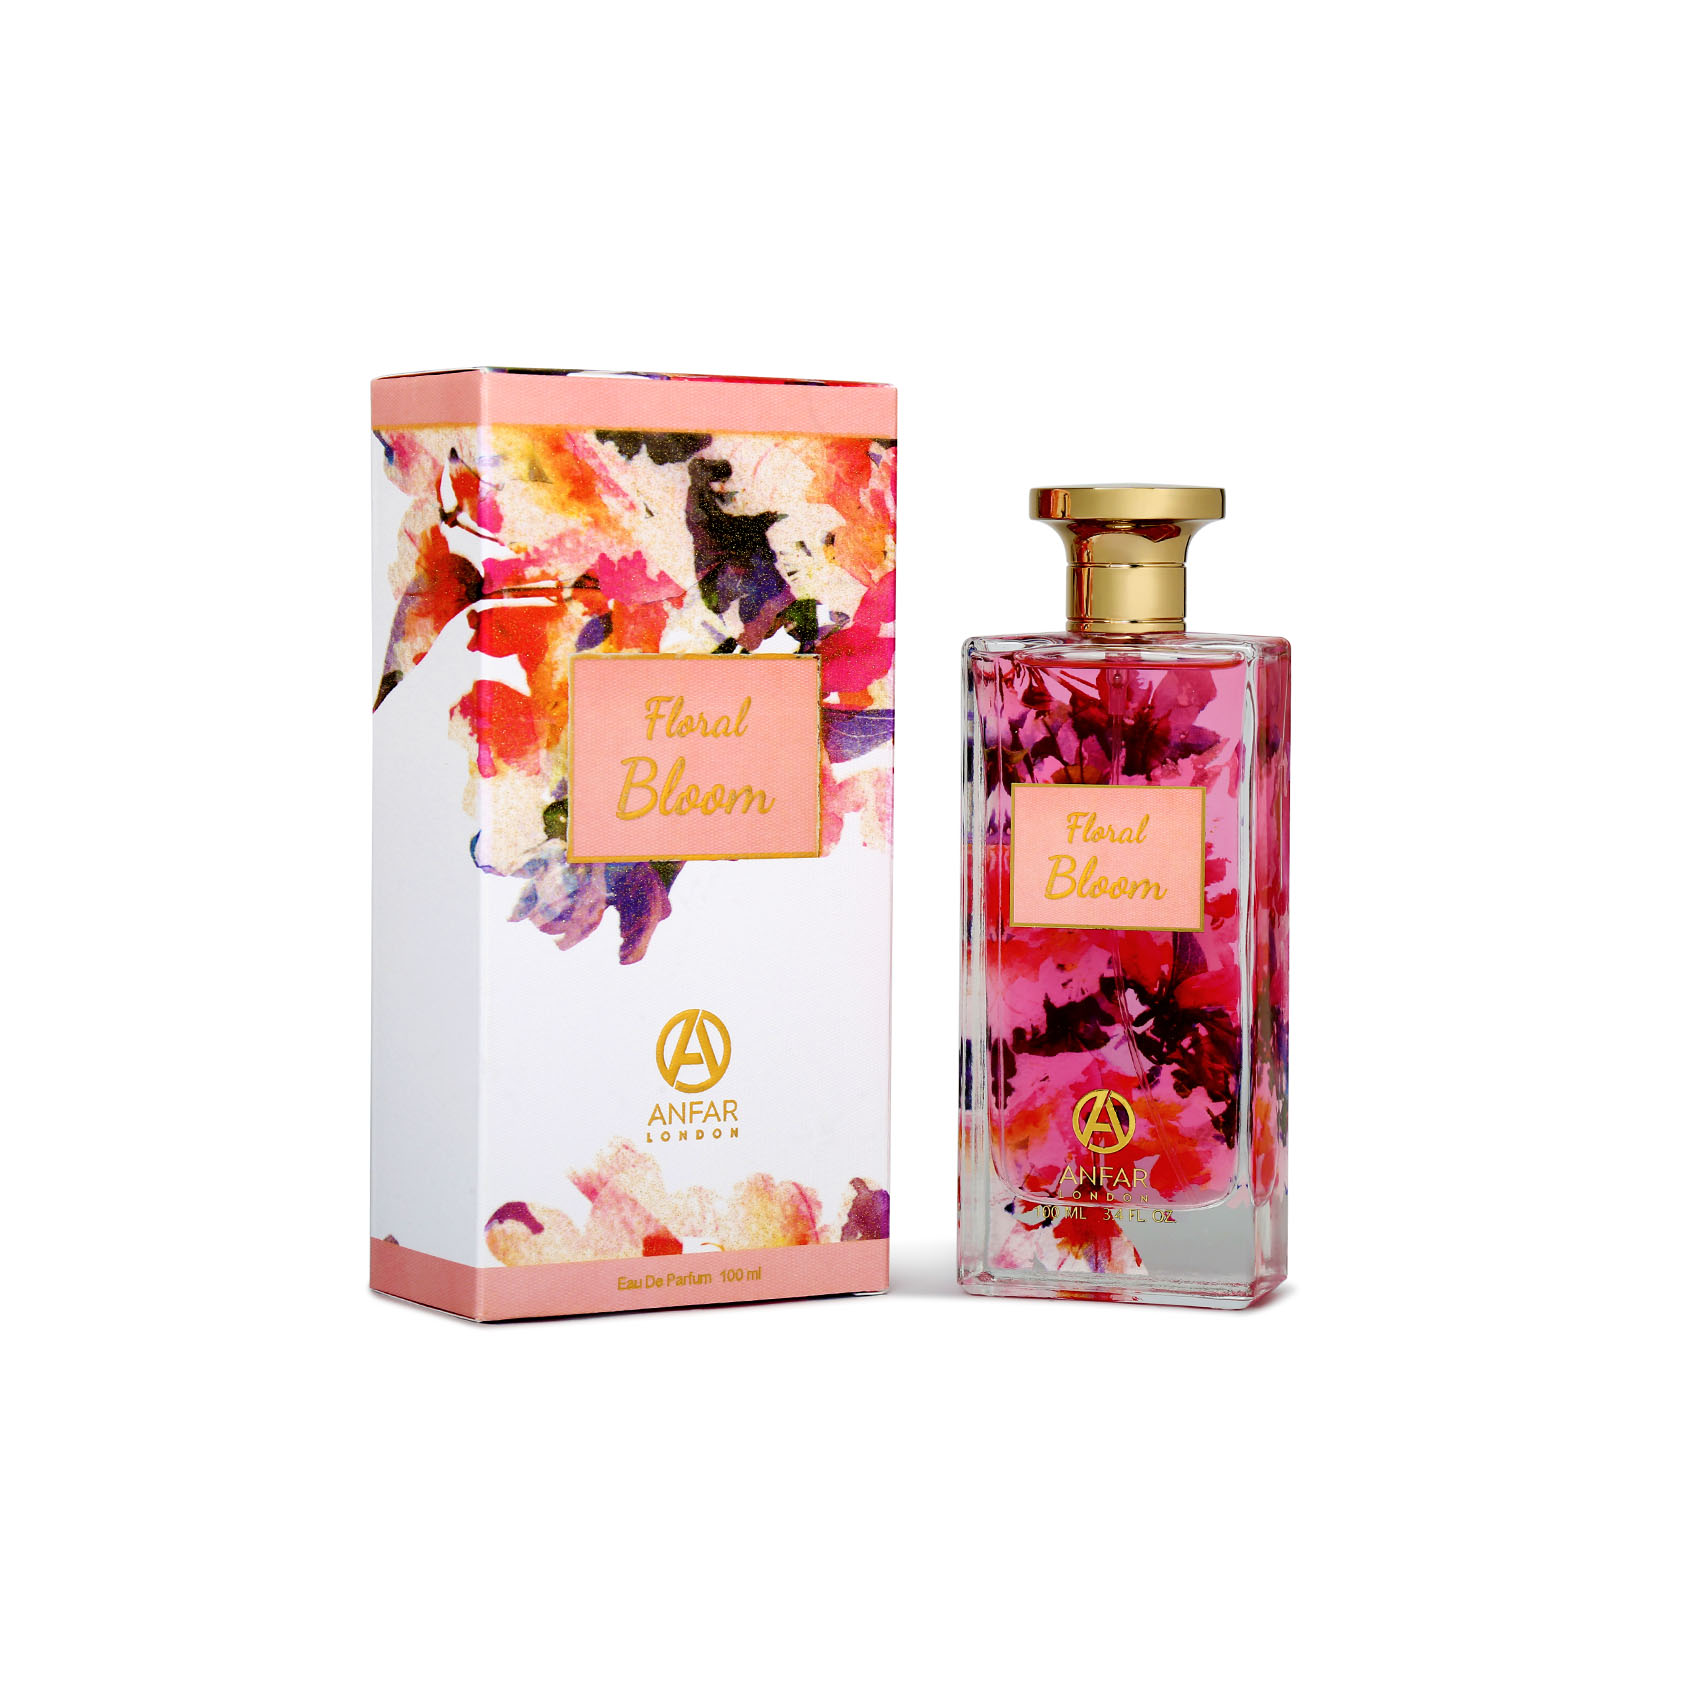 Floral Bloom Eau De Parfum 100ml Perfume For Women  London  By Anfar London - Made In Dubai